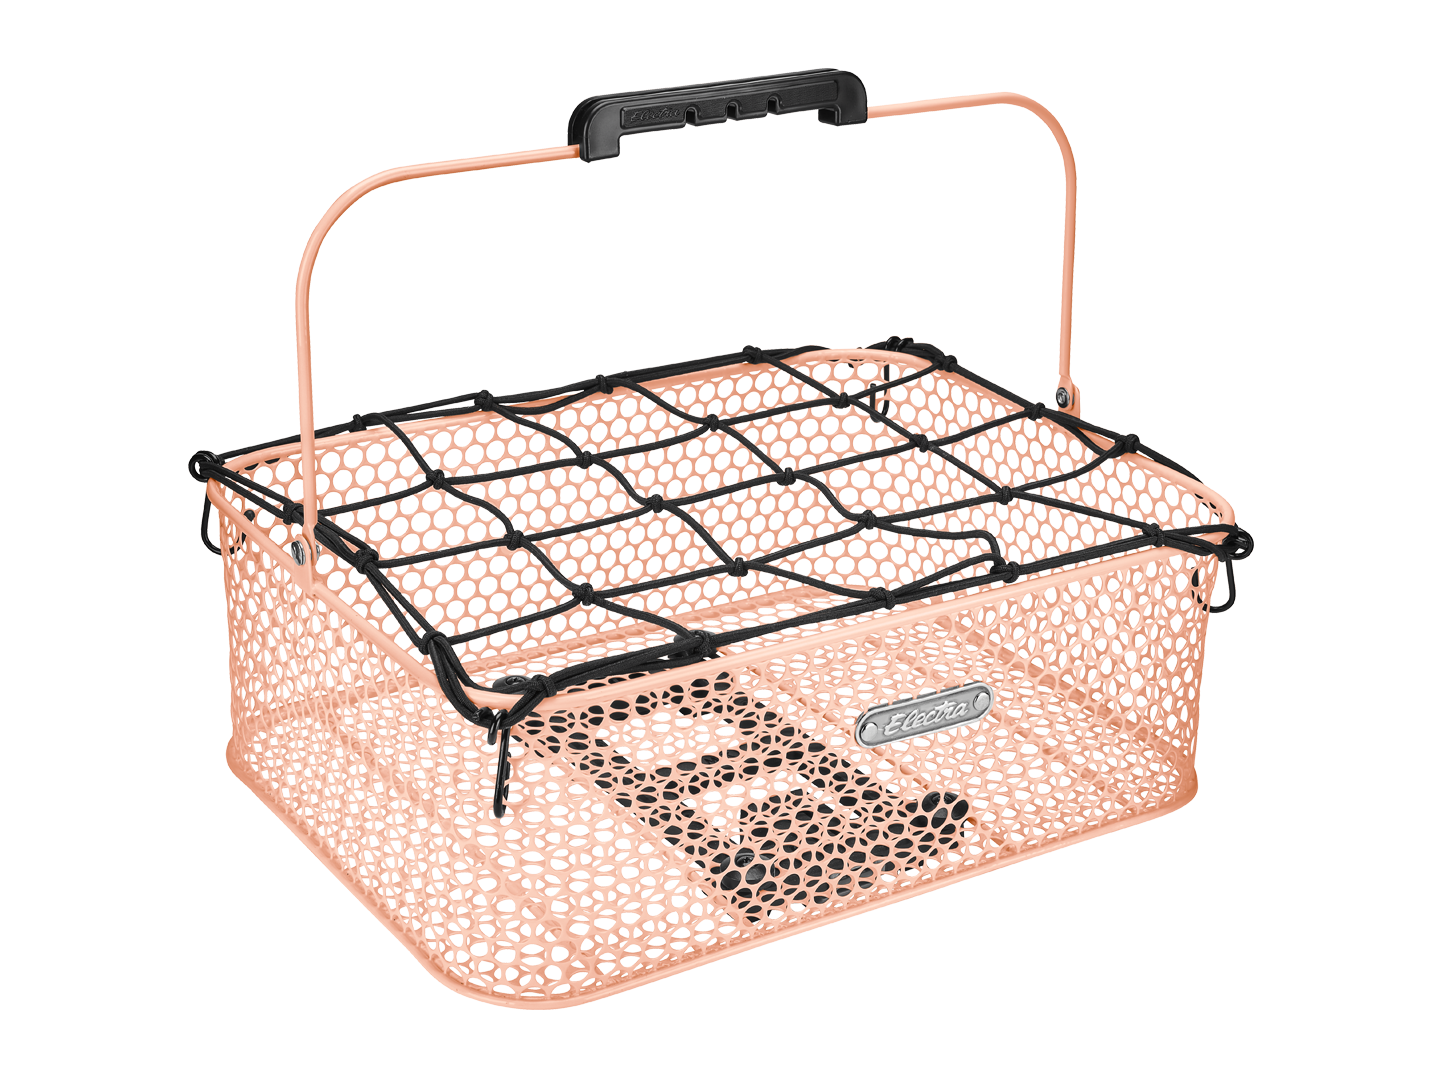 Basket Electra Honeycomb Low Profile MIK Blush Pink Rear